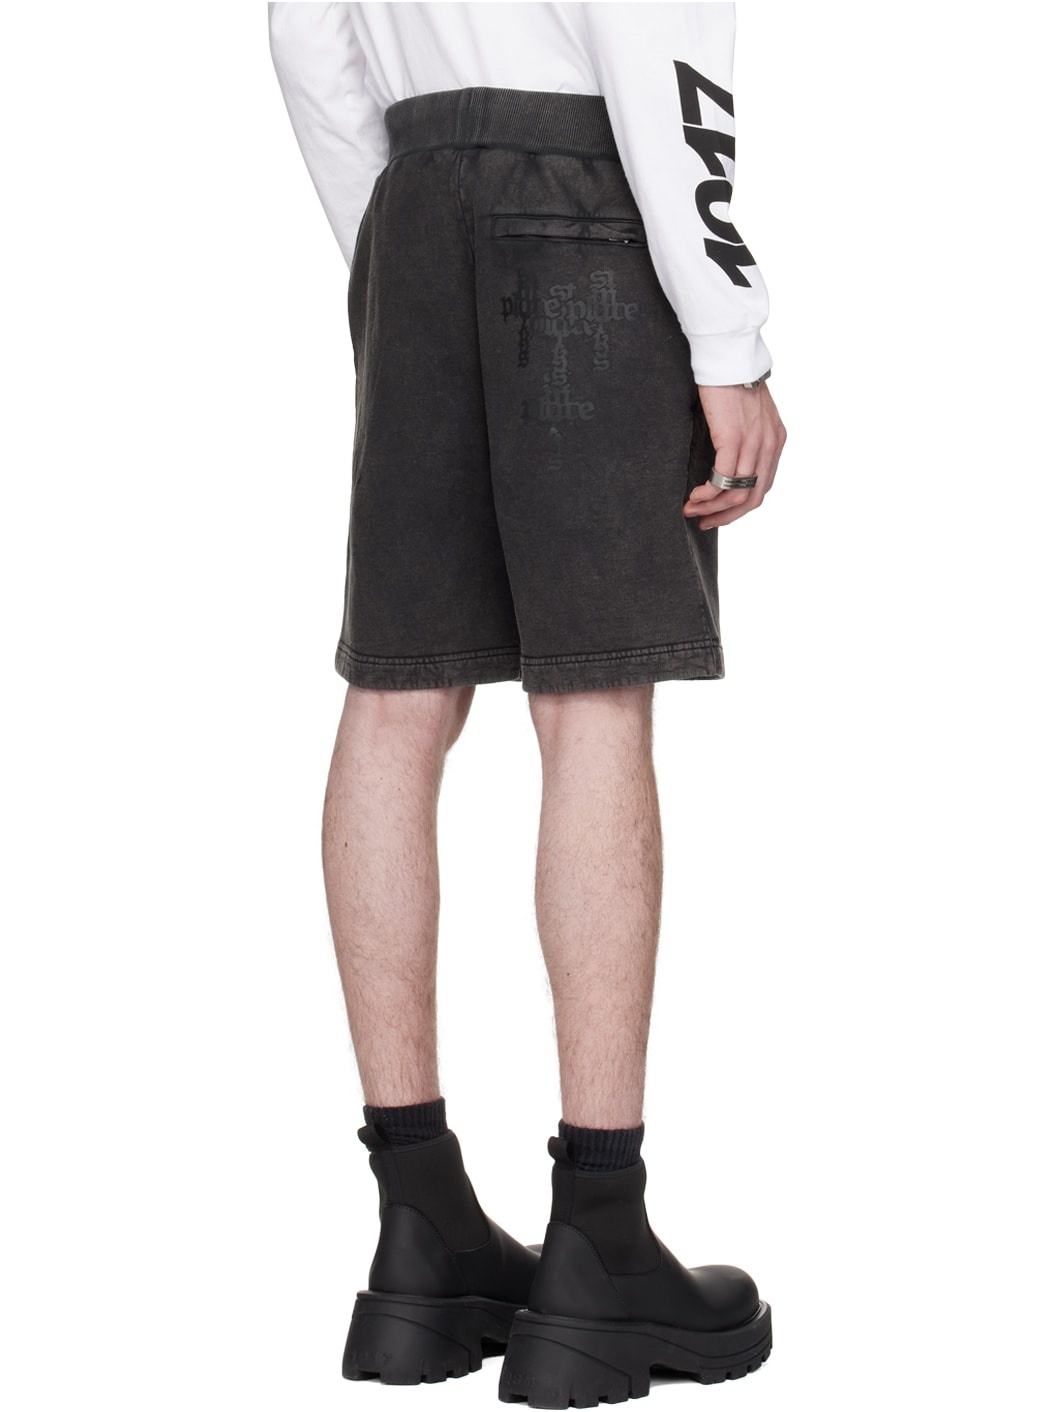 Black Cross Shorts - 3